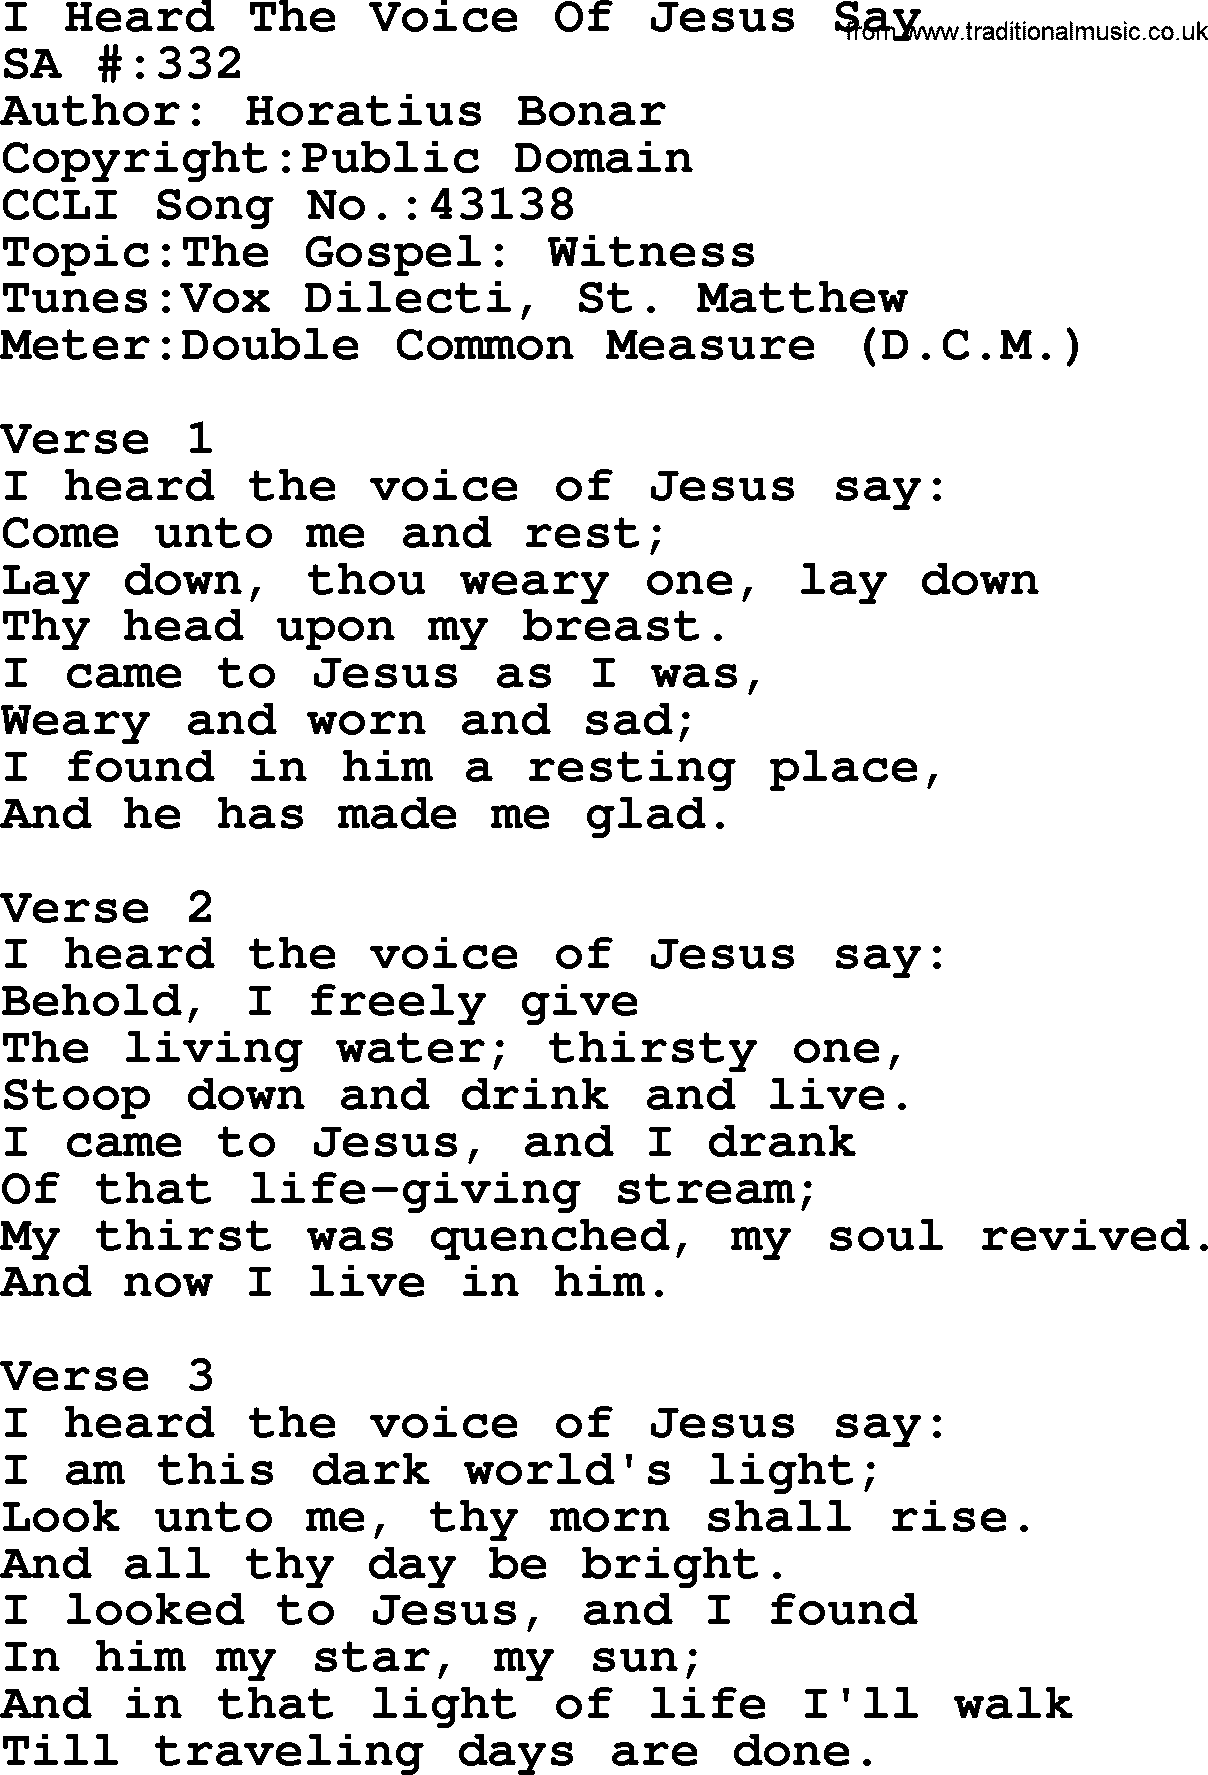 I Heard The Voice Of Jesus Say Lyrics - LyricsWalls